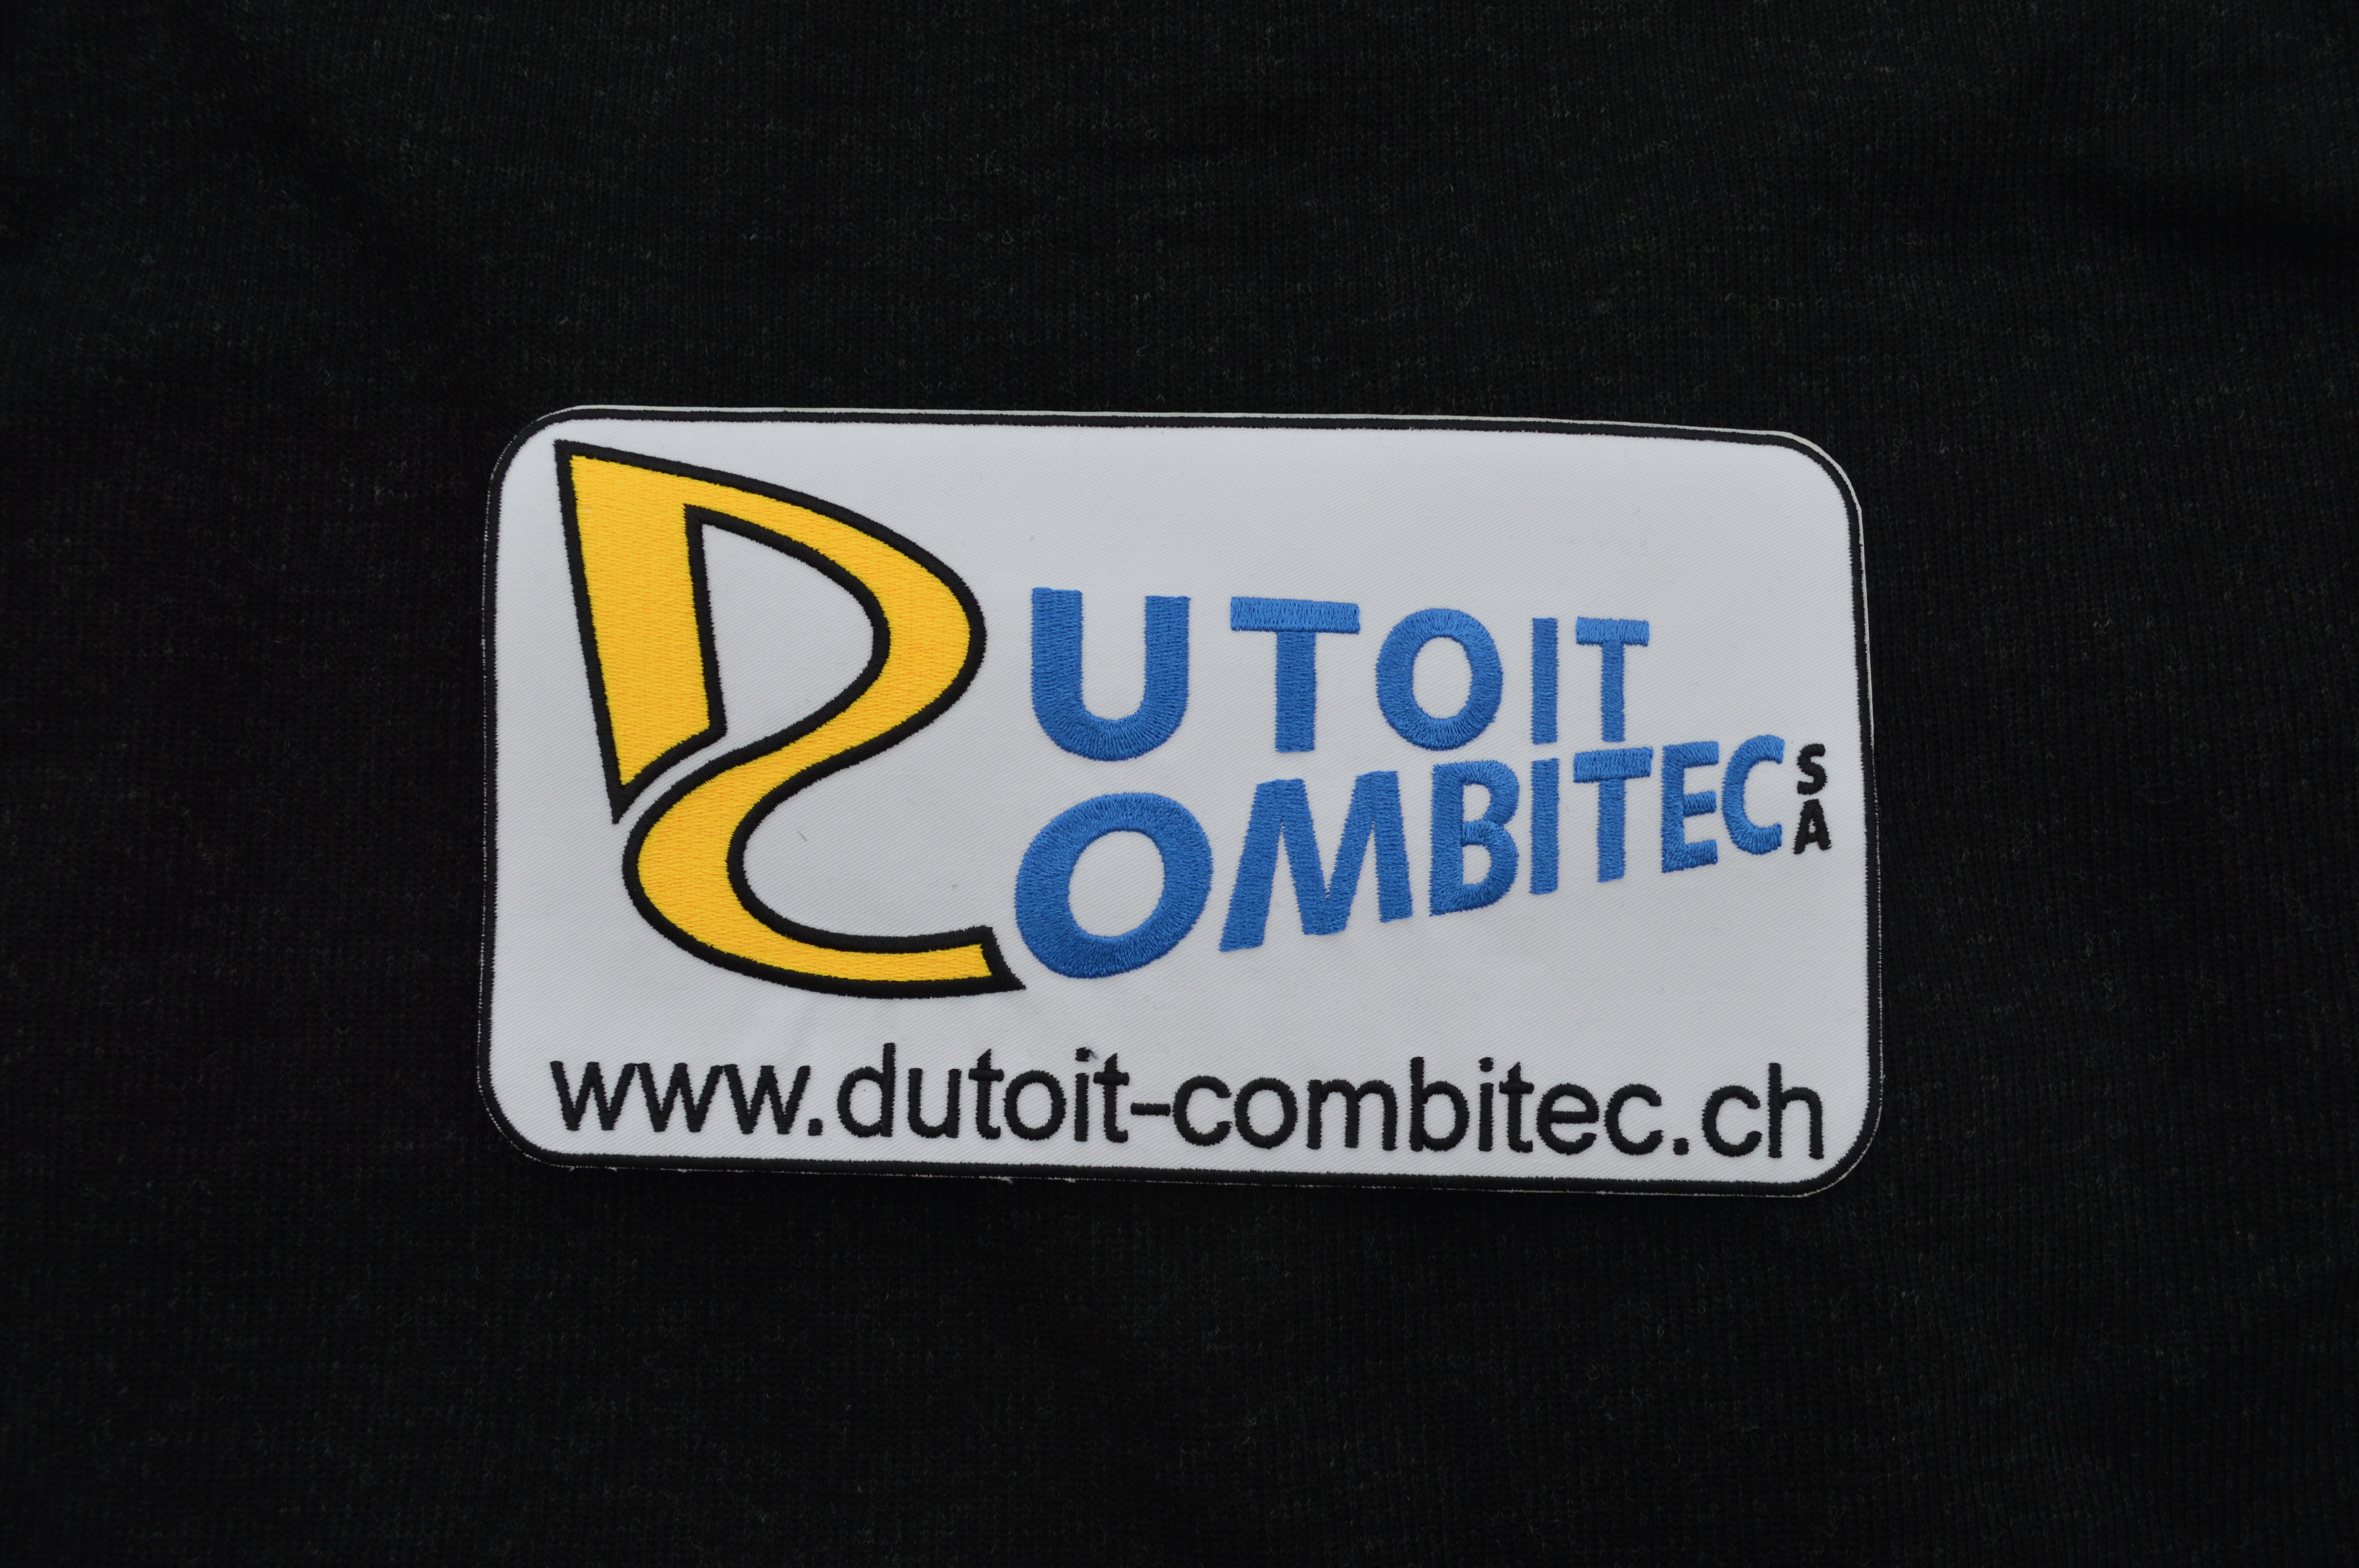 Dutoit Combitec